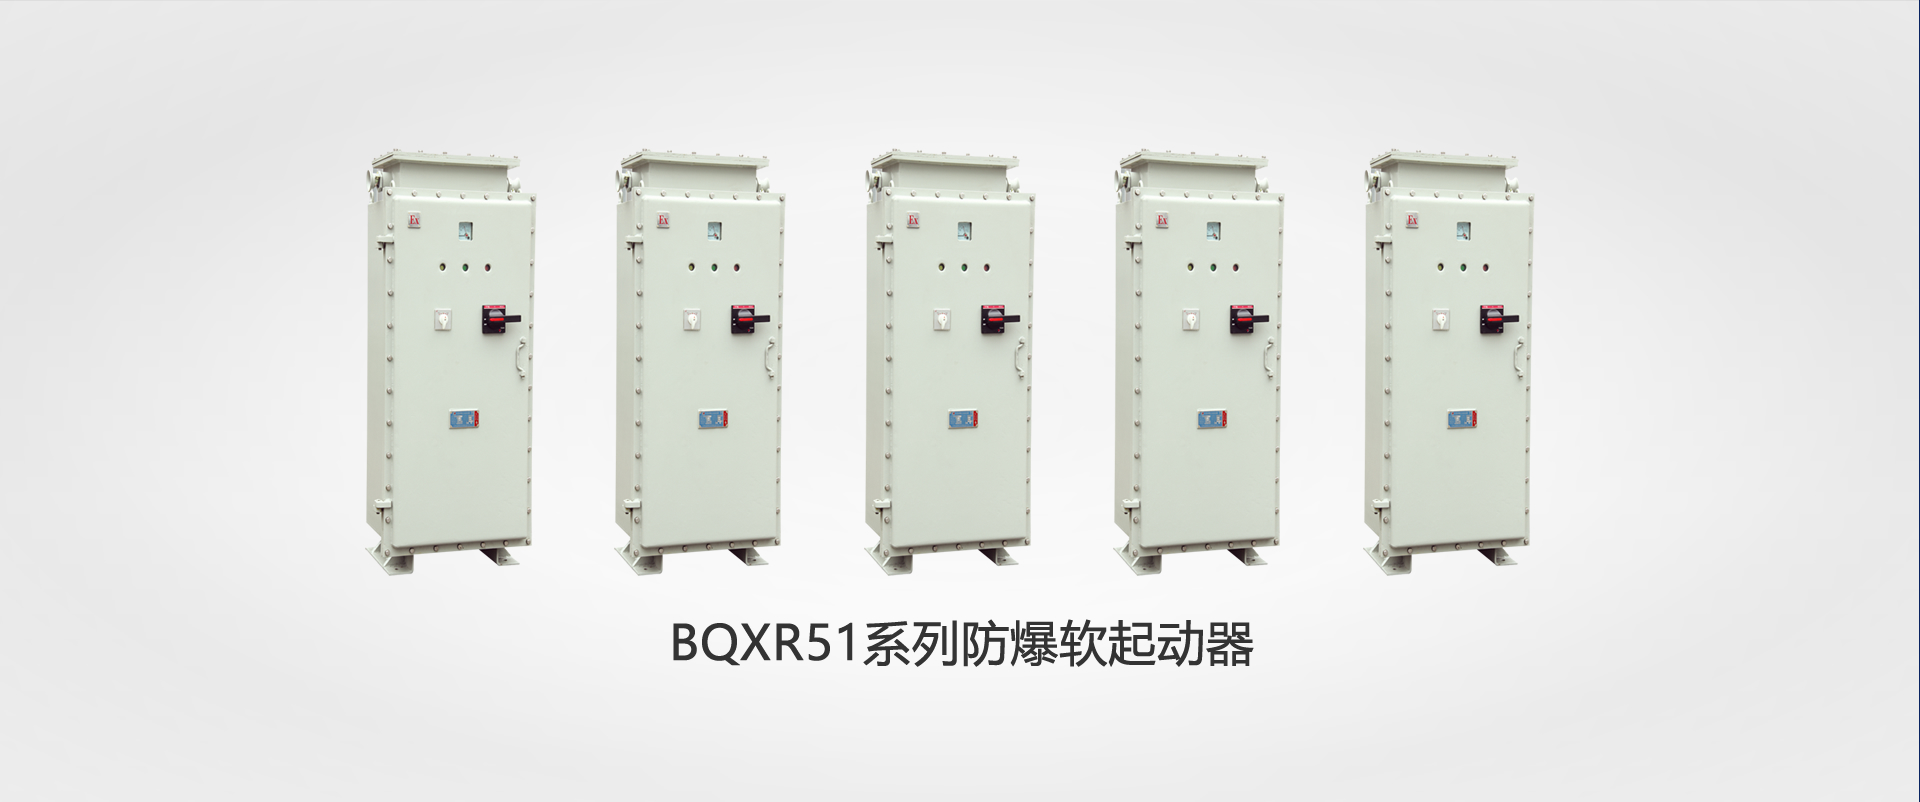 BQXR51系(xi)列防爆軟(ruan)起動器